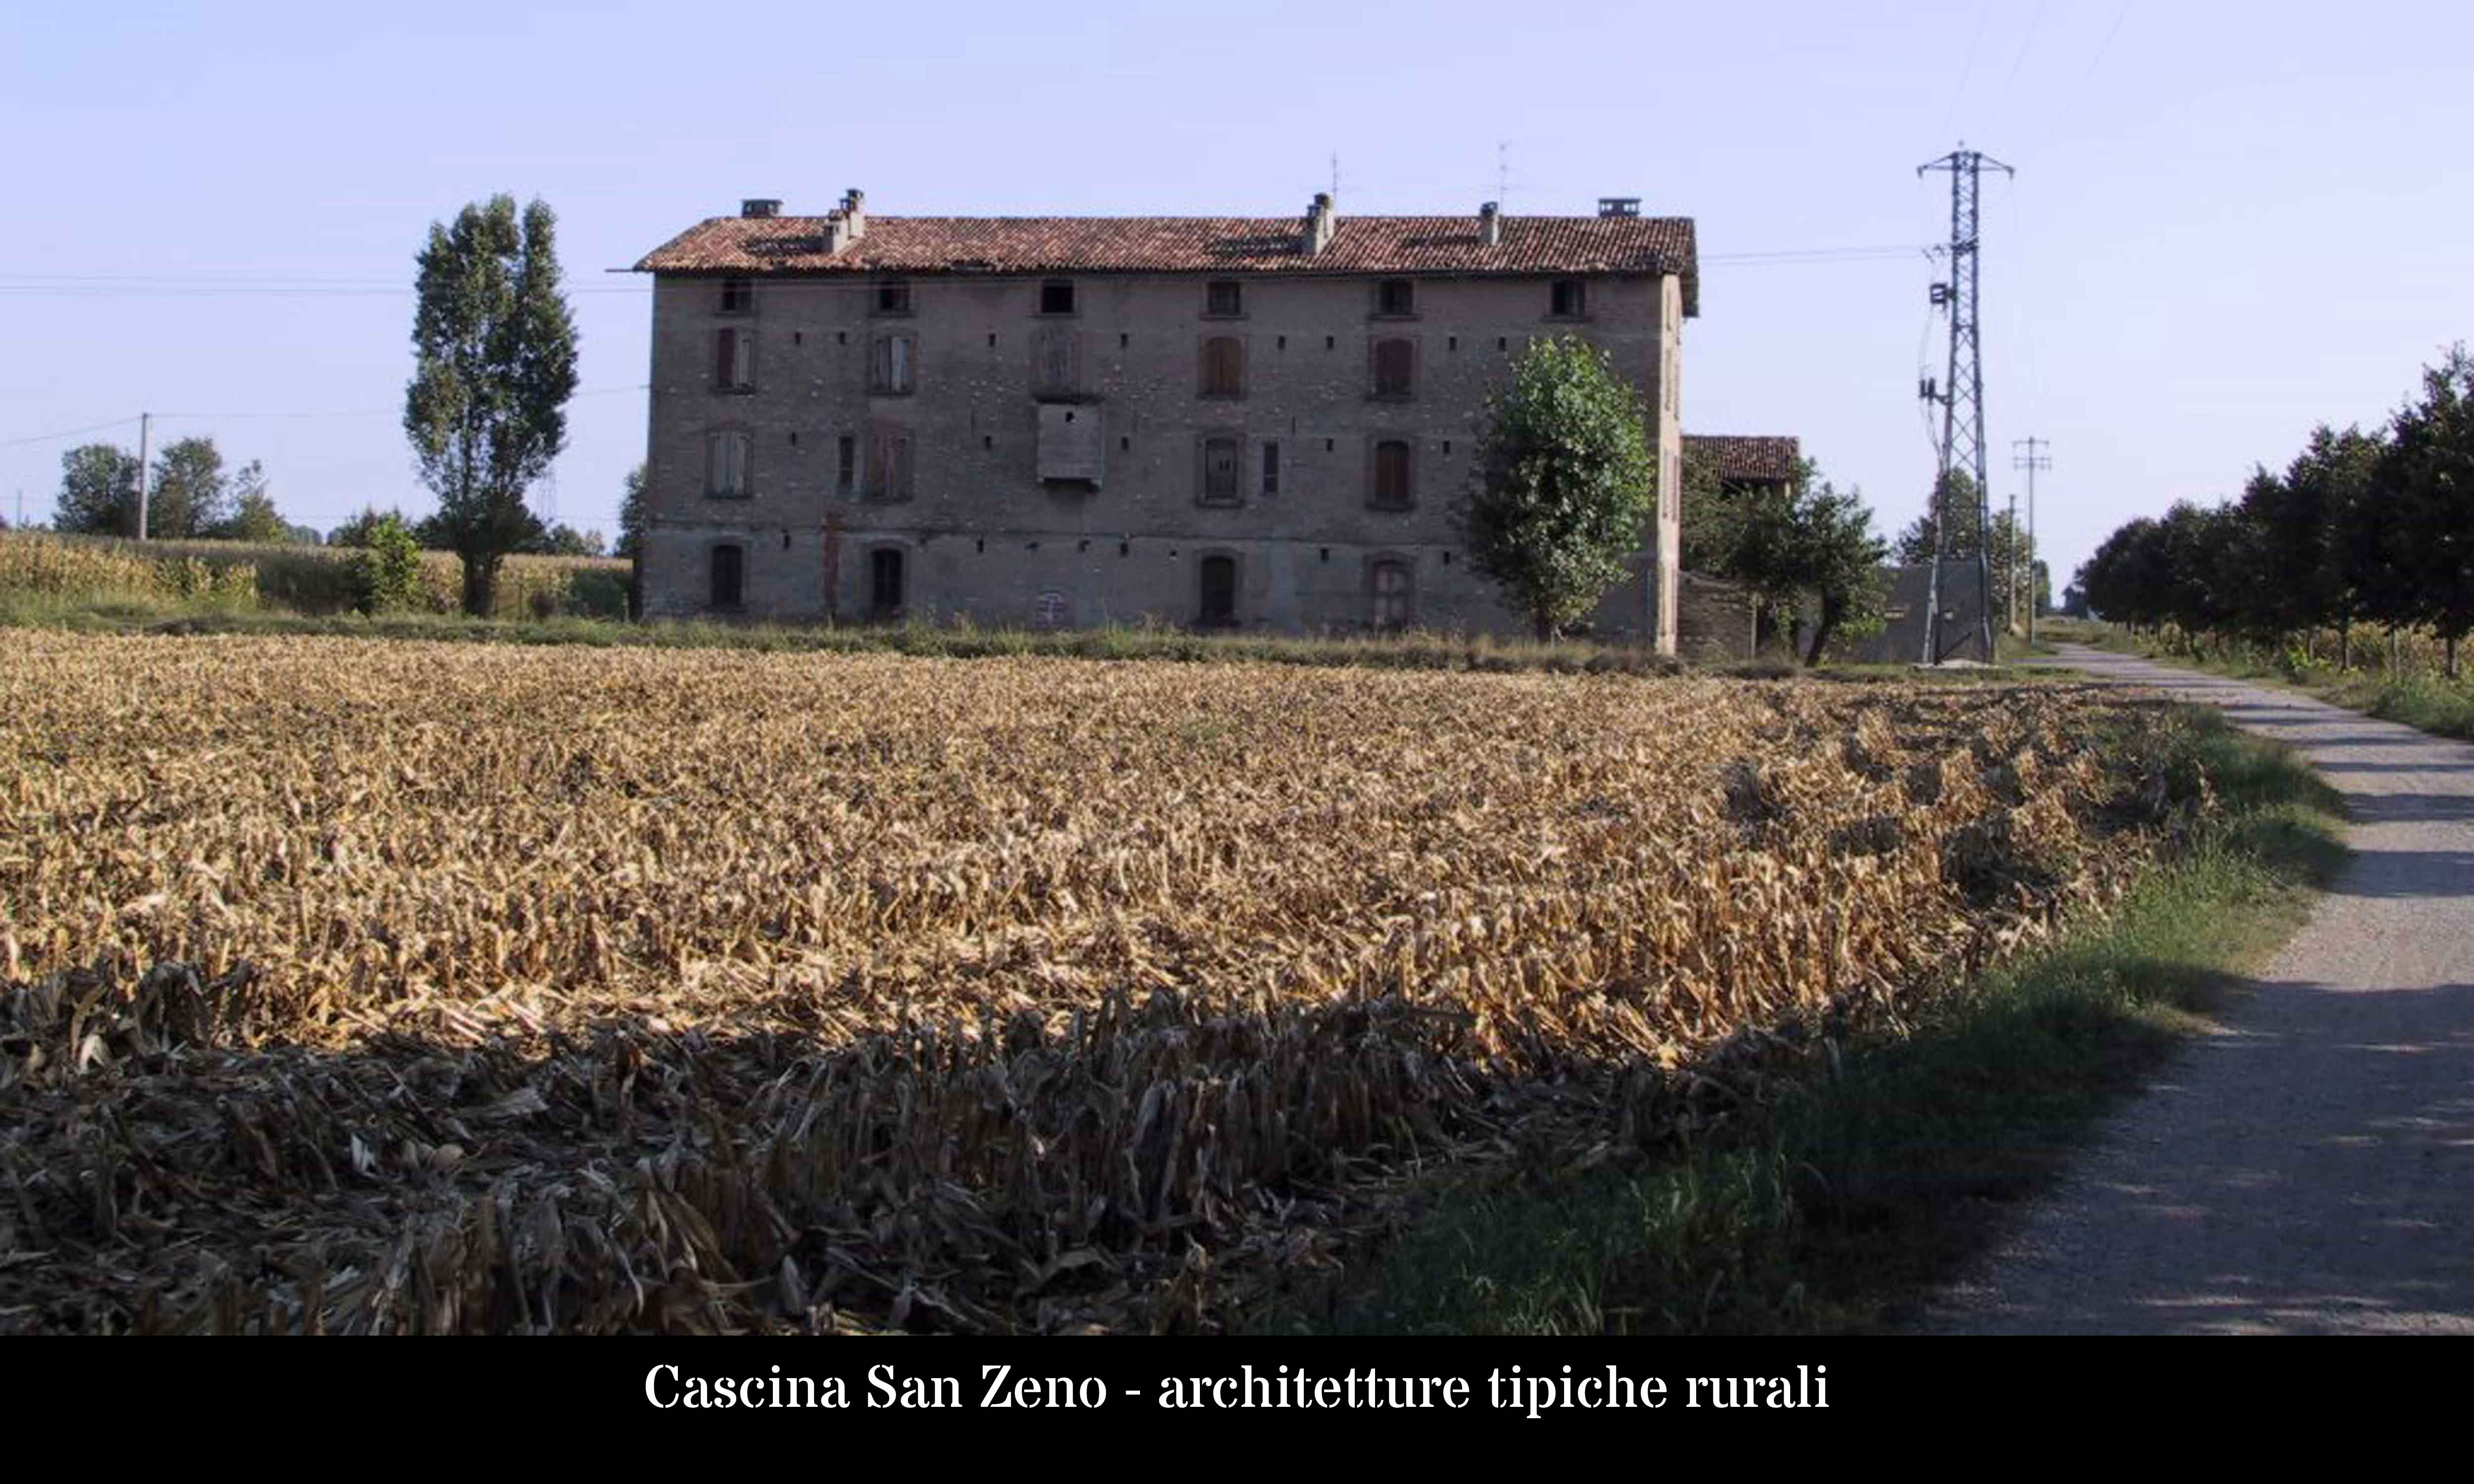 Architetture rurali tipiche, la Cascina San Zeno